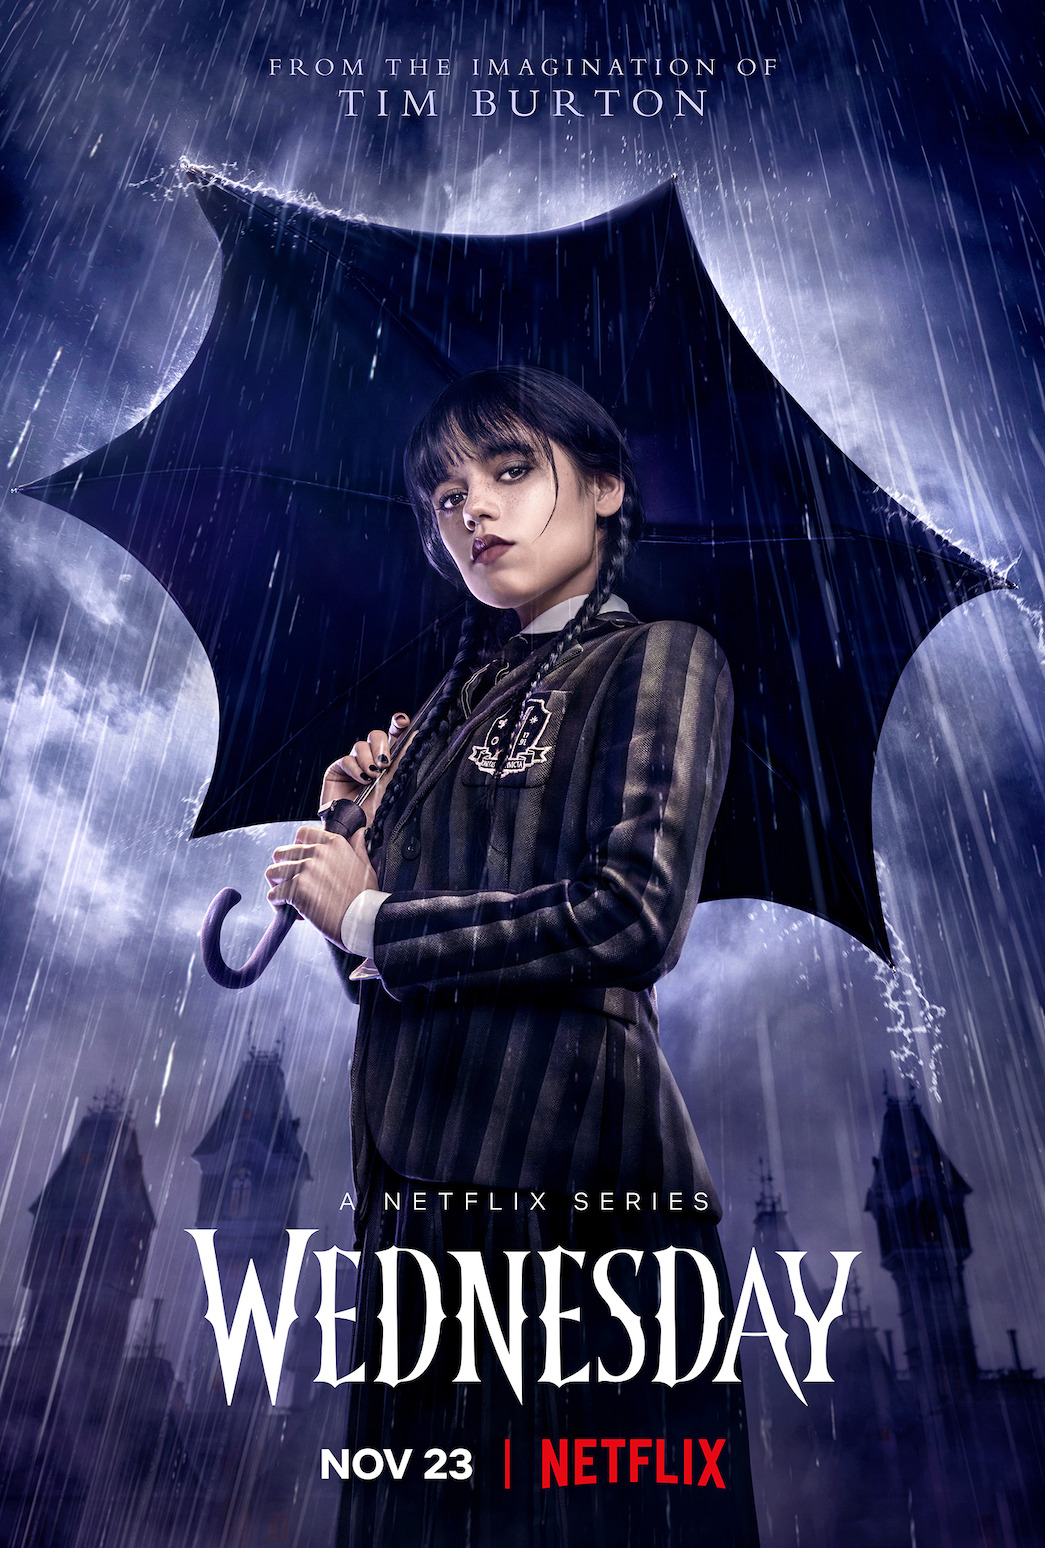 'Wednesday' series art. Image: Netflix